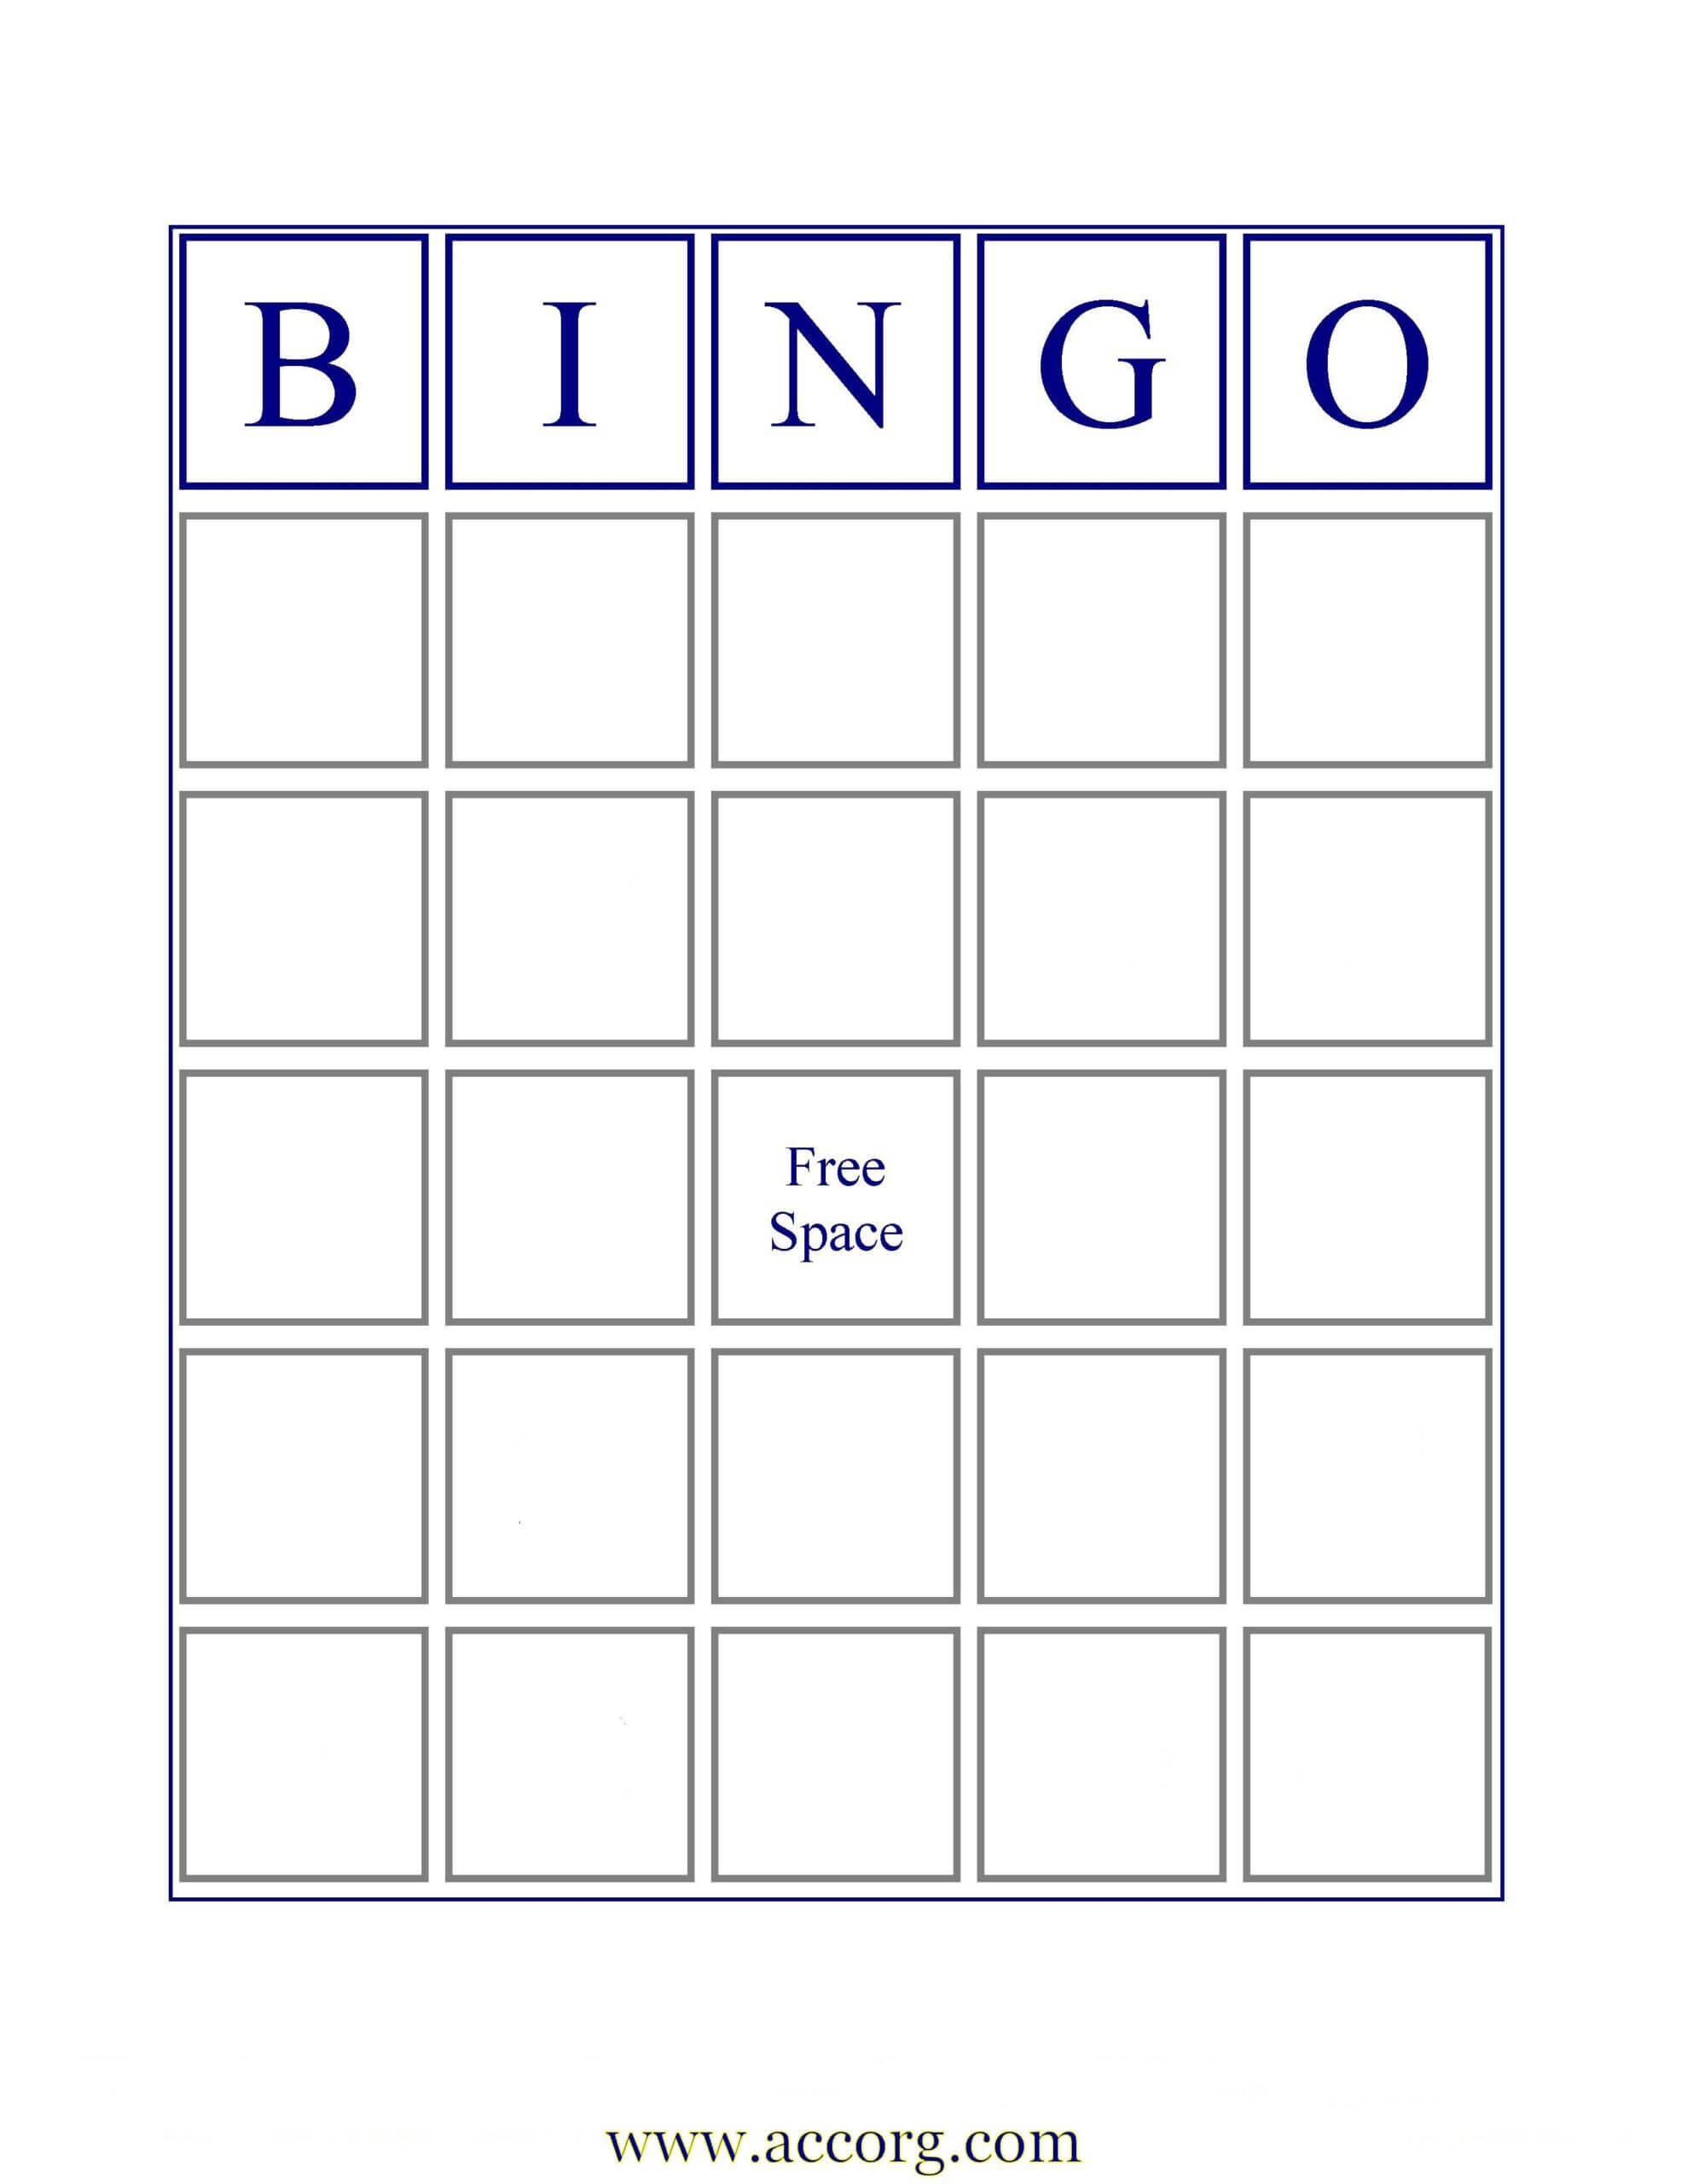 Blank Bingo Cards | If You Want An Image Of A Standard Bingo Regarding Blank Bingo Template Pdf